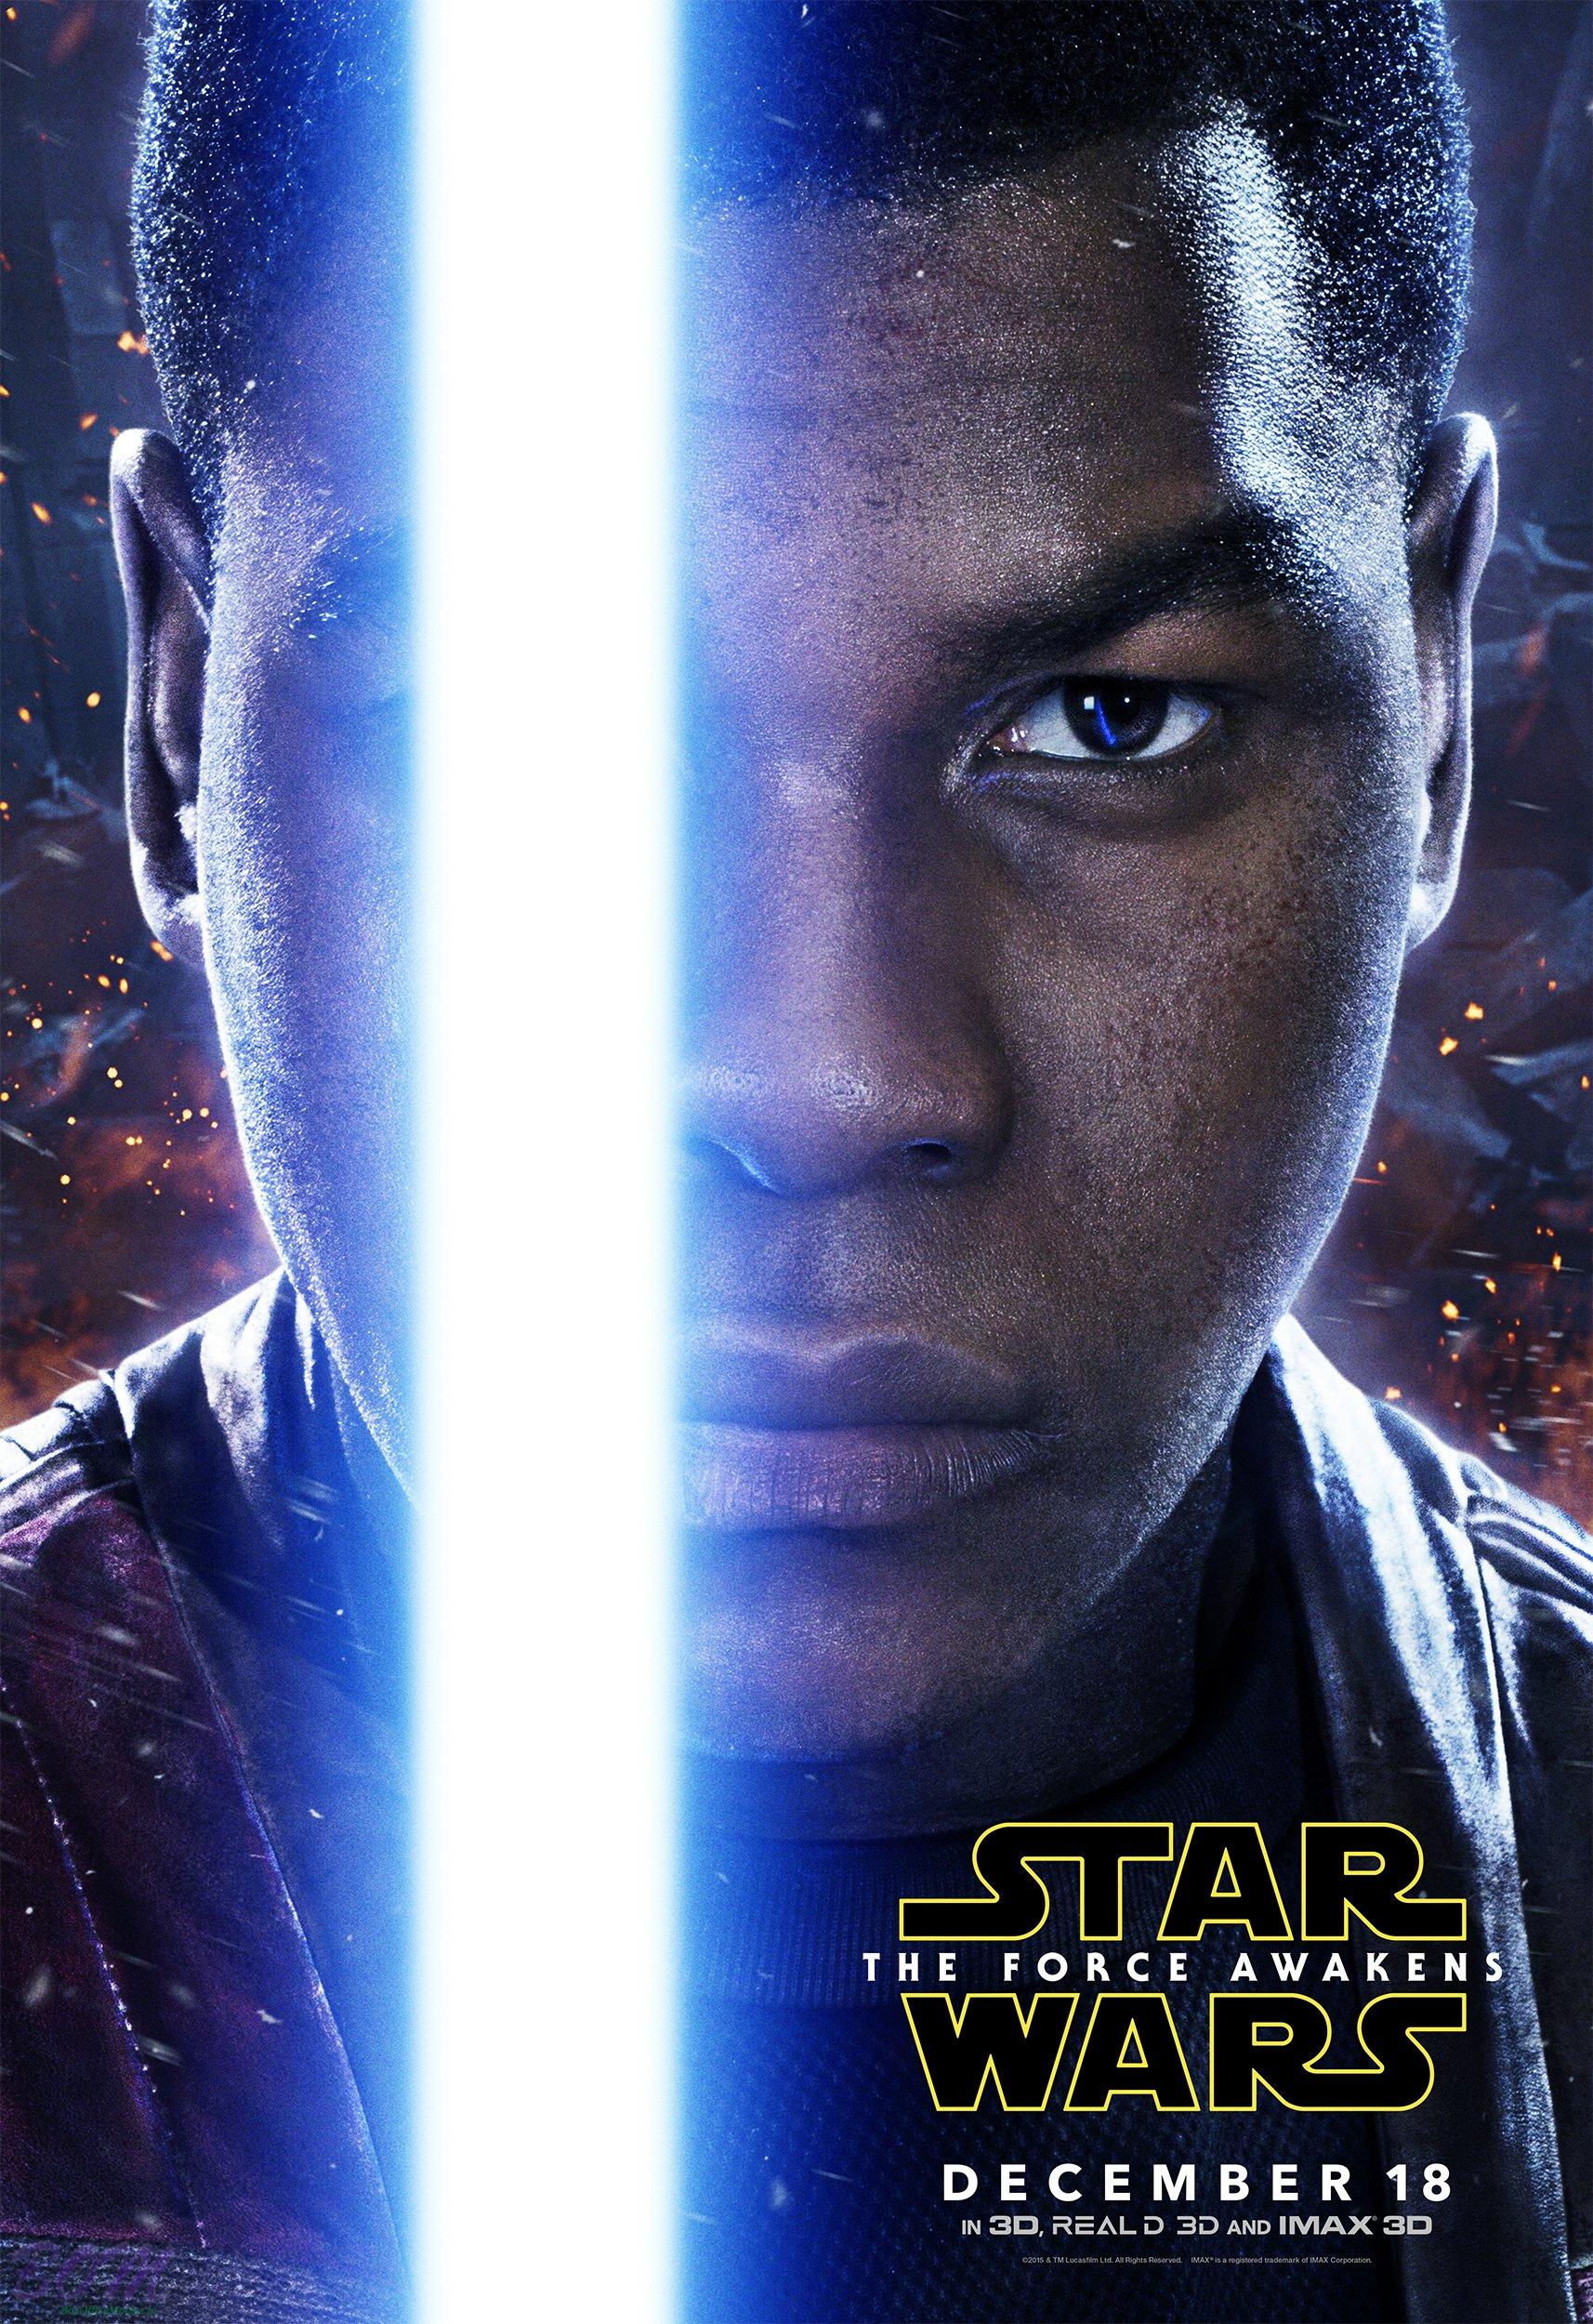 Star Wars The Force Awakens New Finn Poster Boxofficemovies In